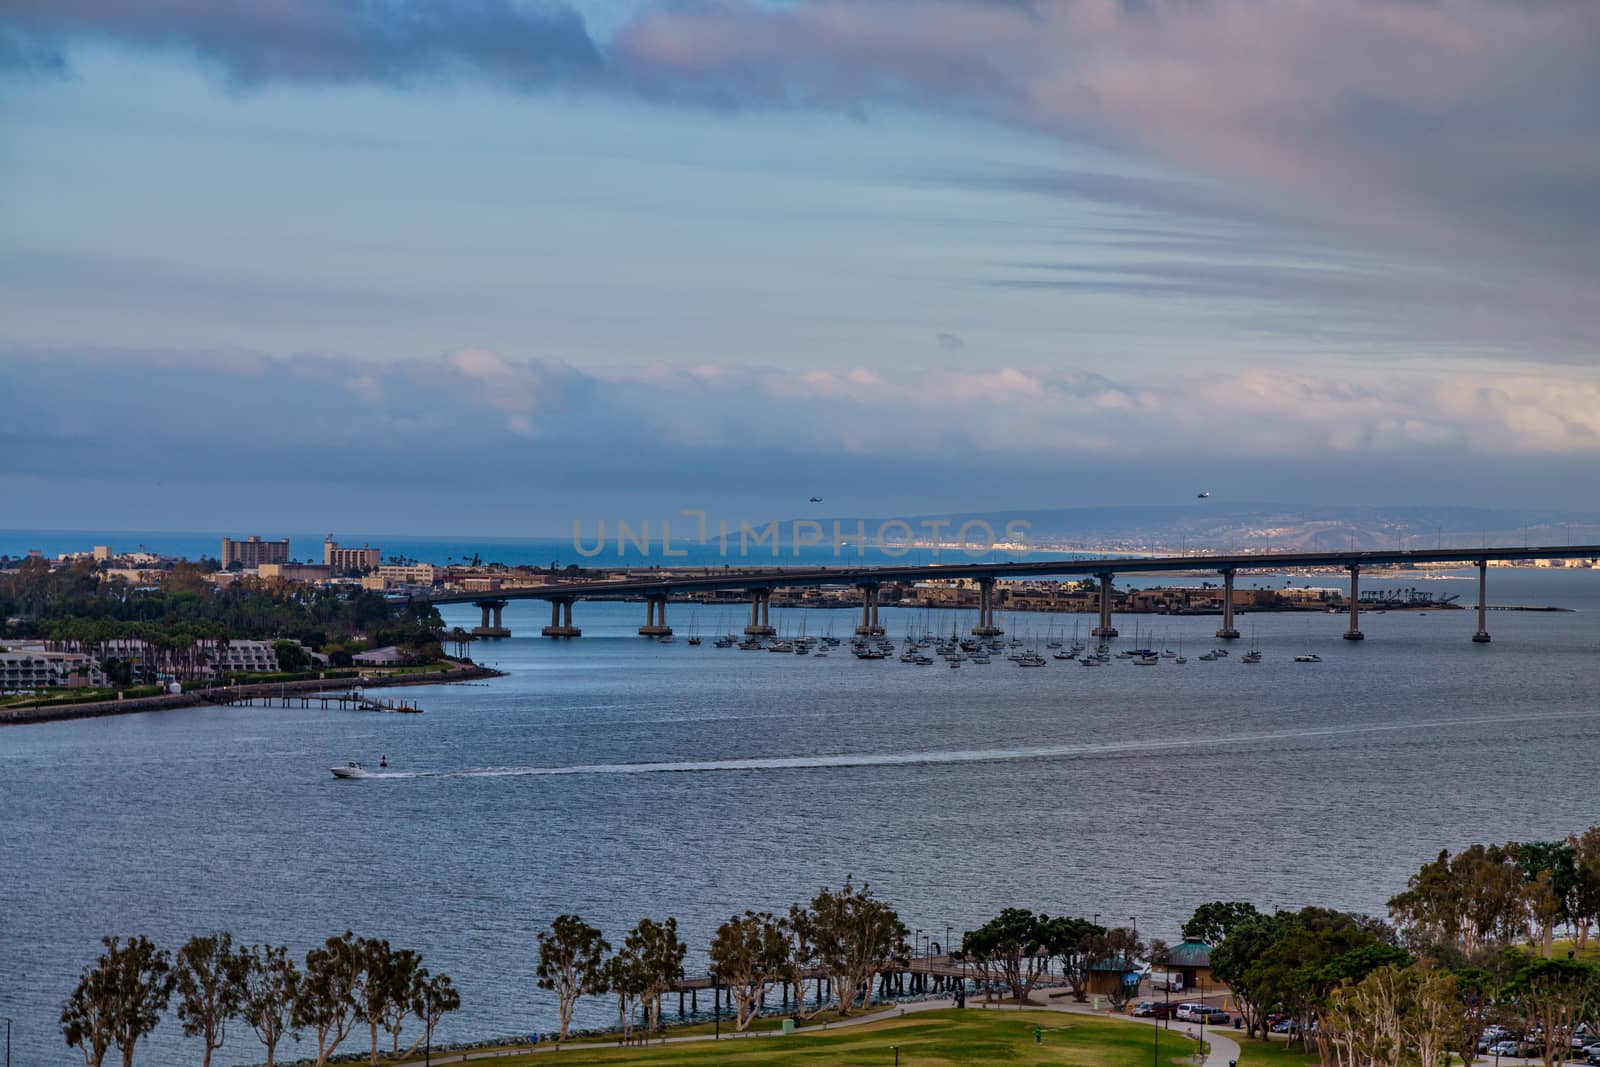 Bridge from San Diego to Coronado at dusk